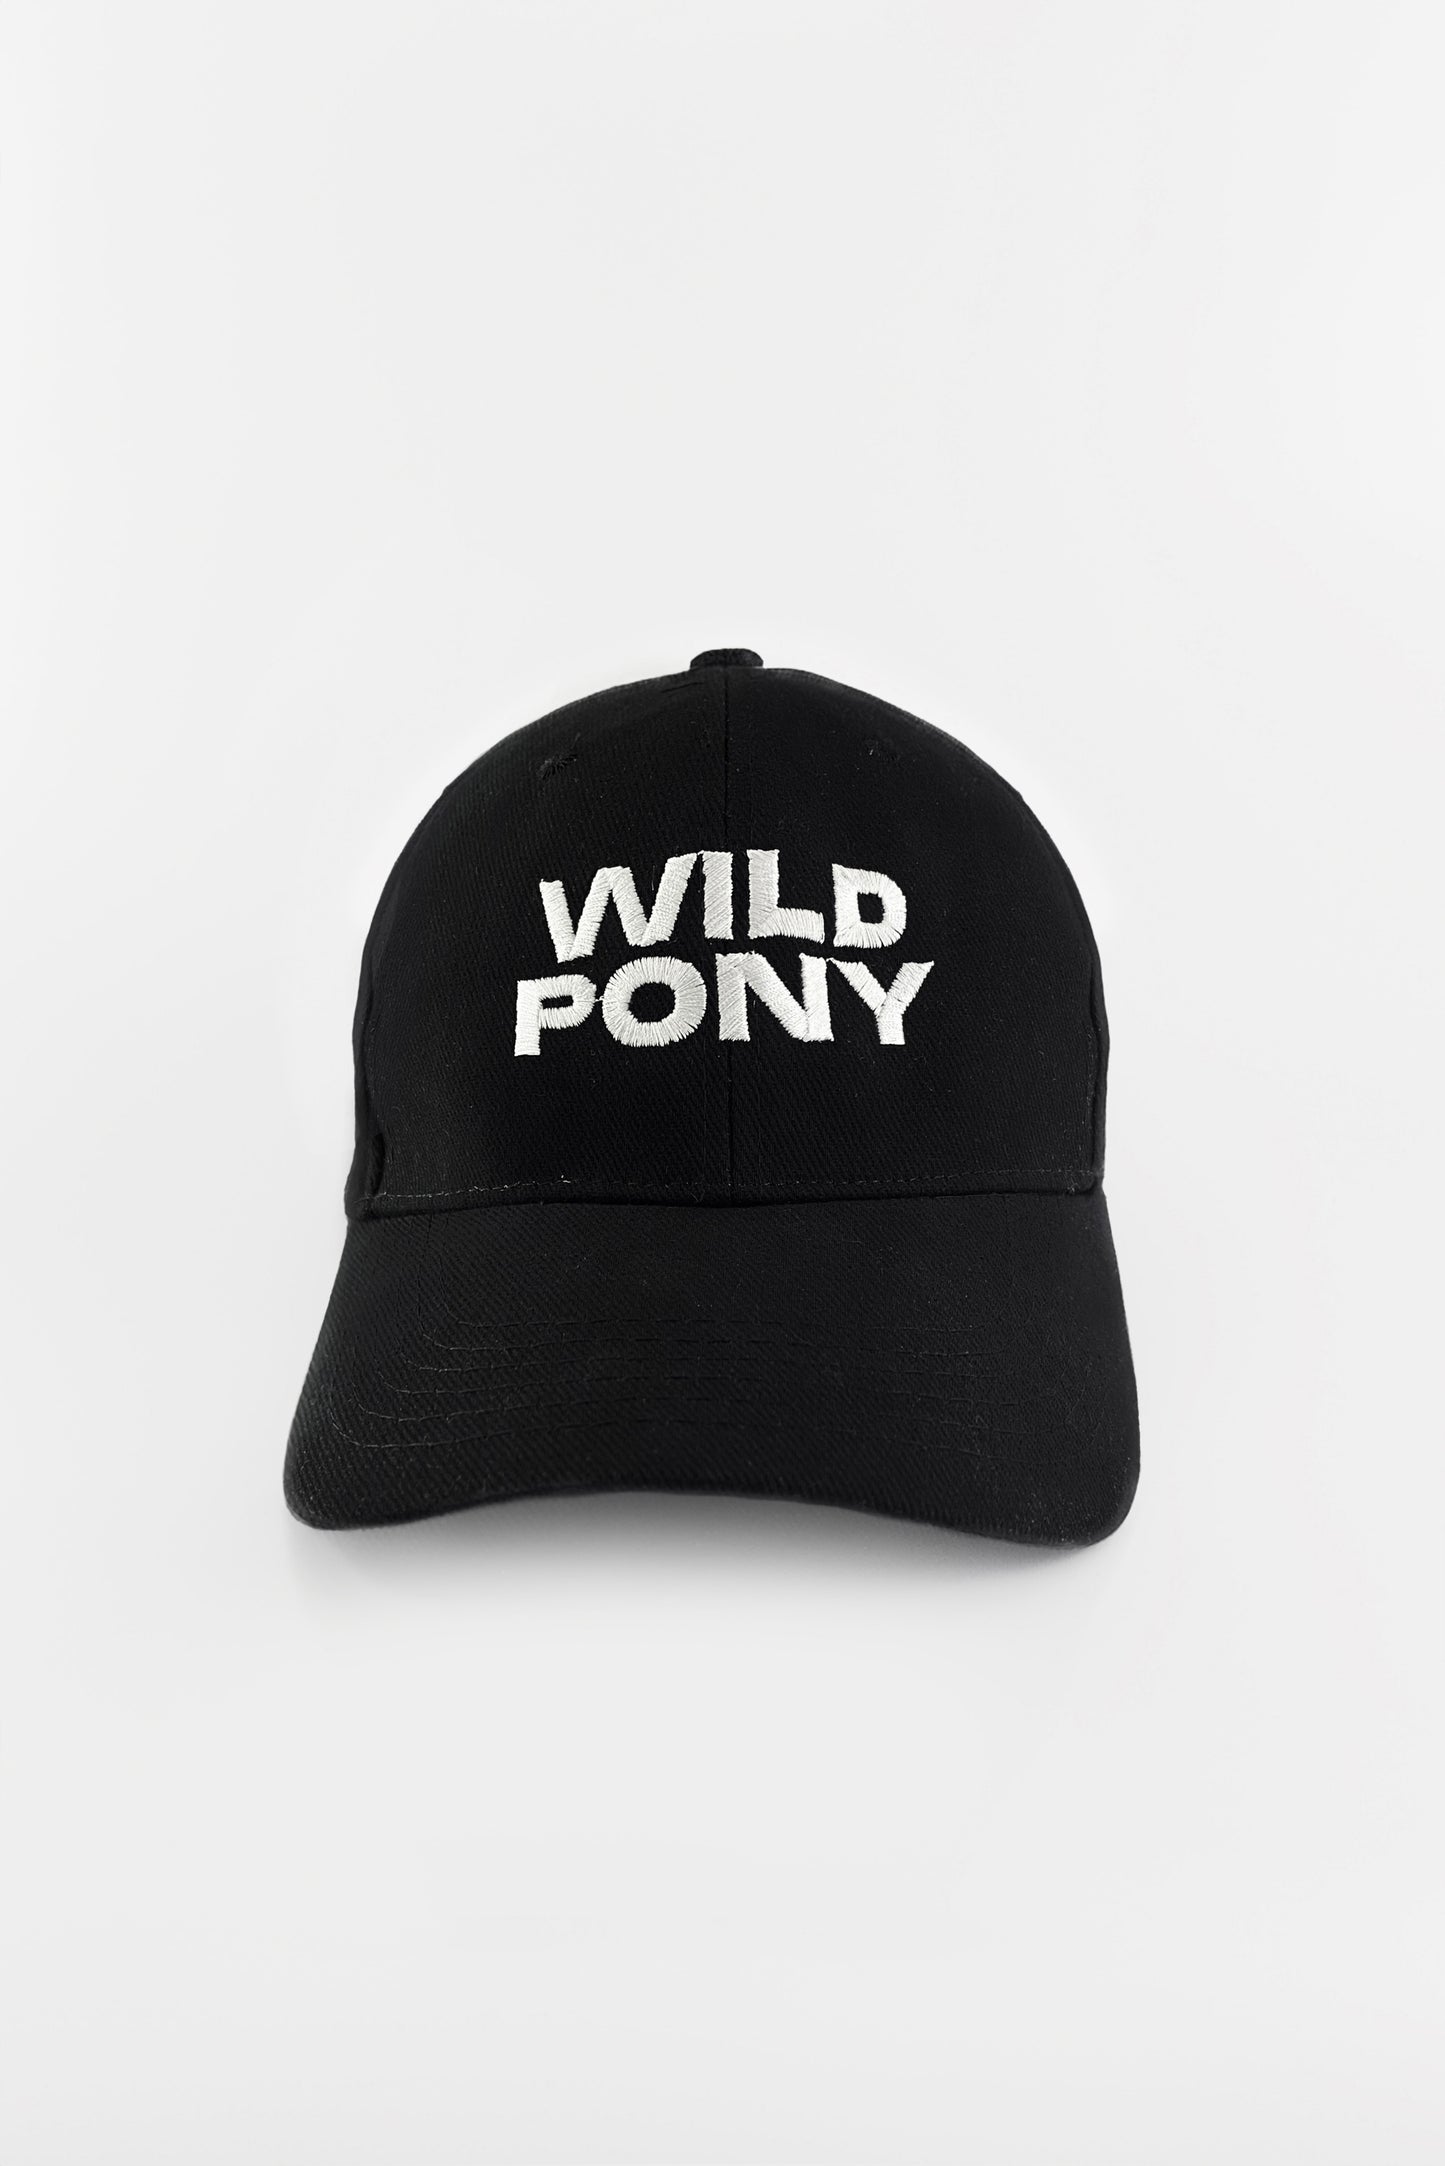 Gorra Wild Pony con logo bordado